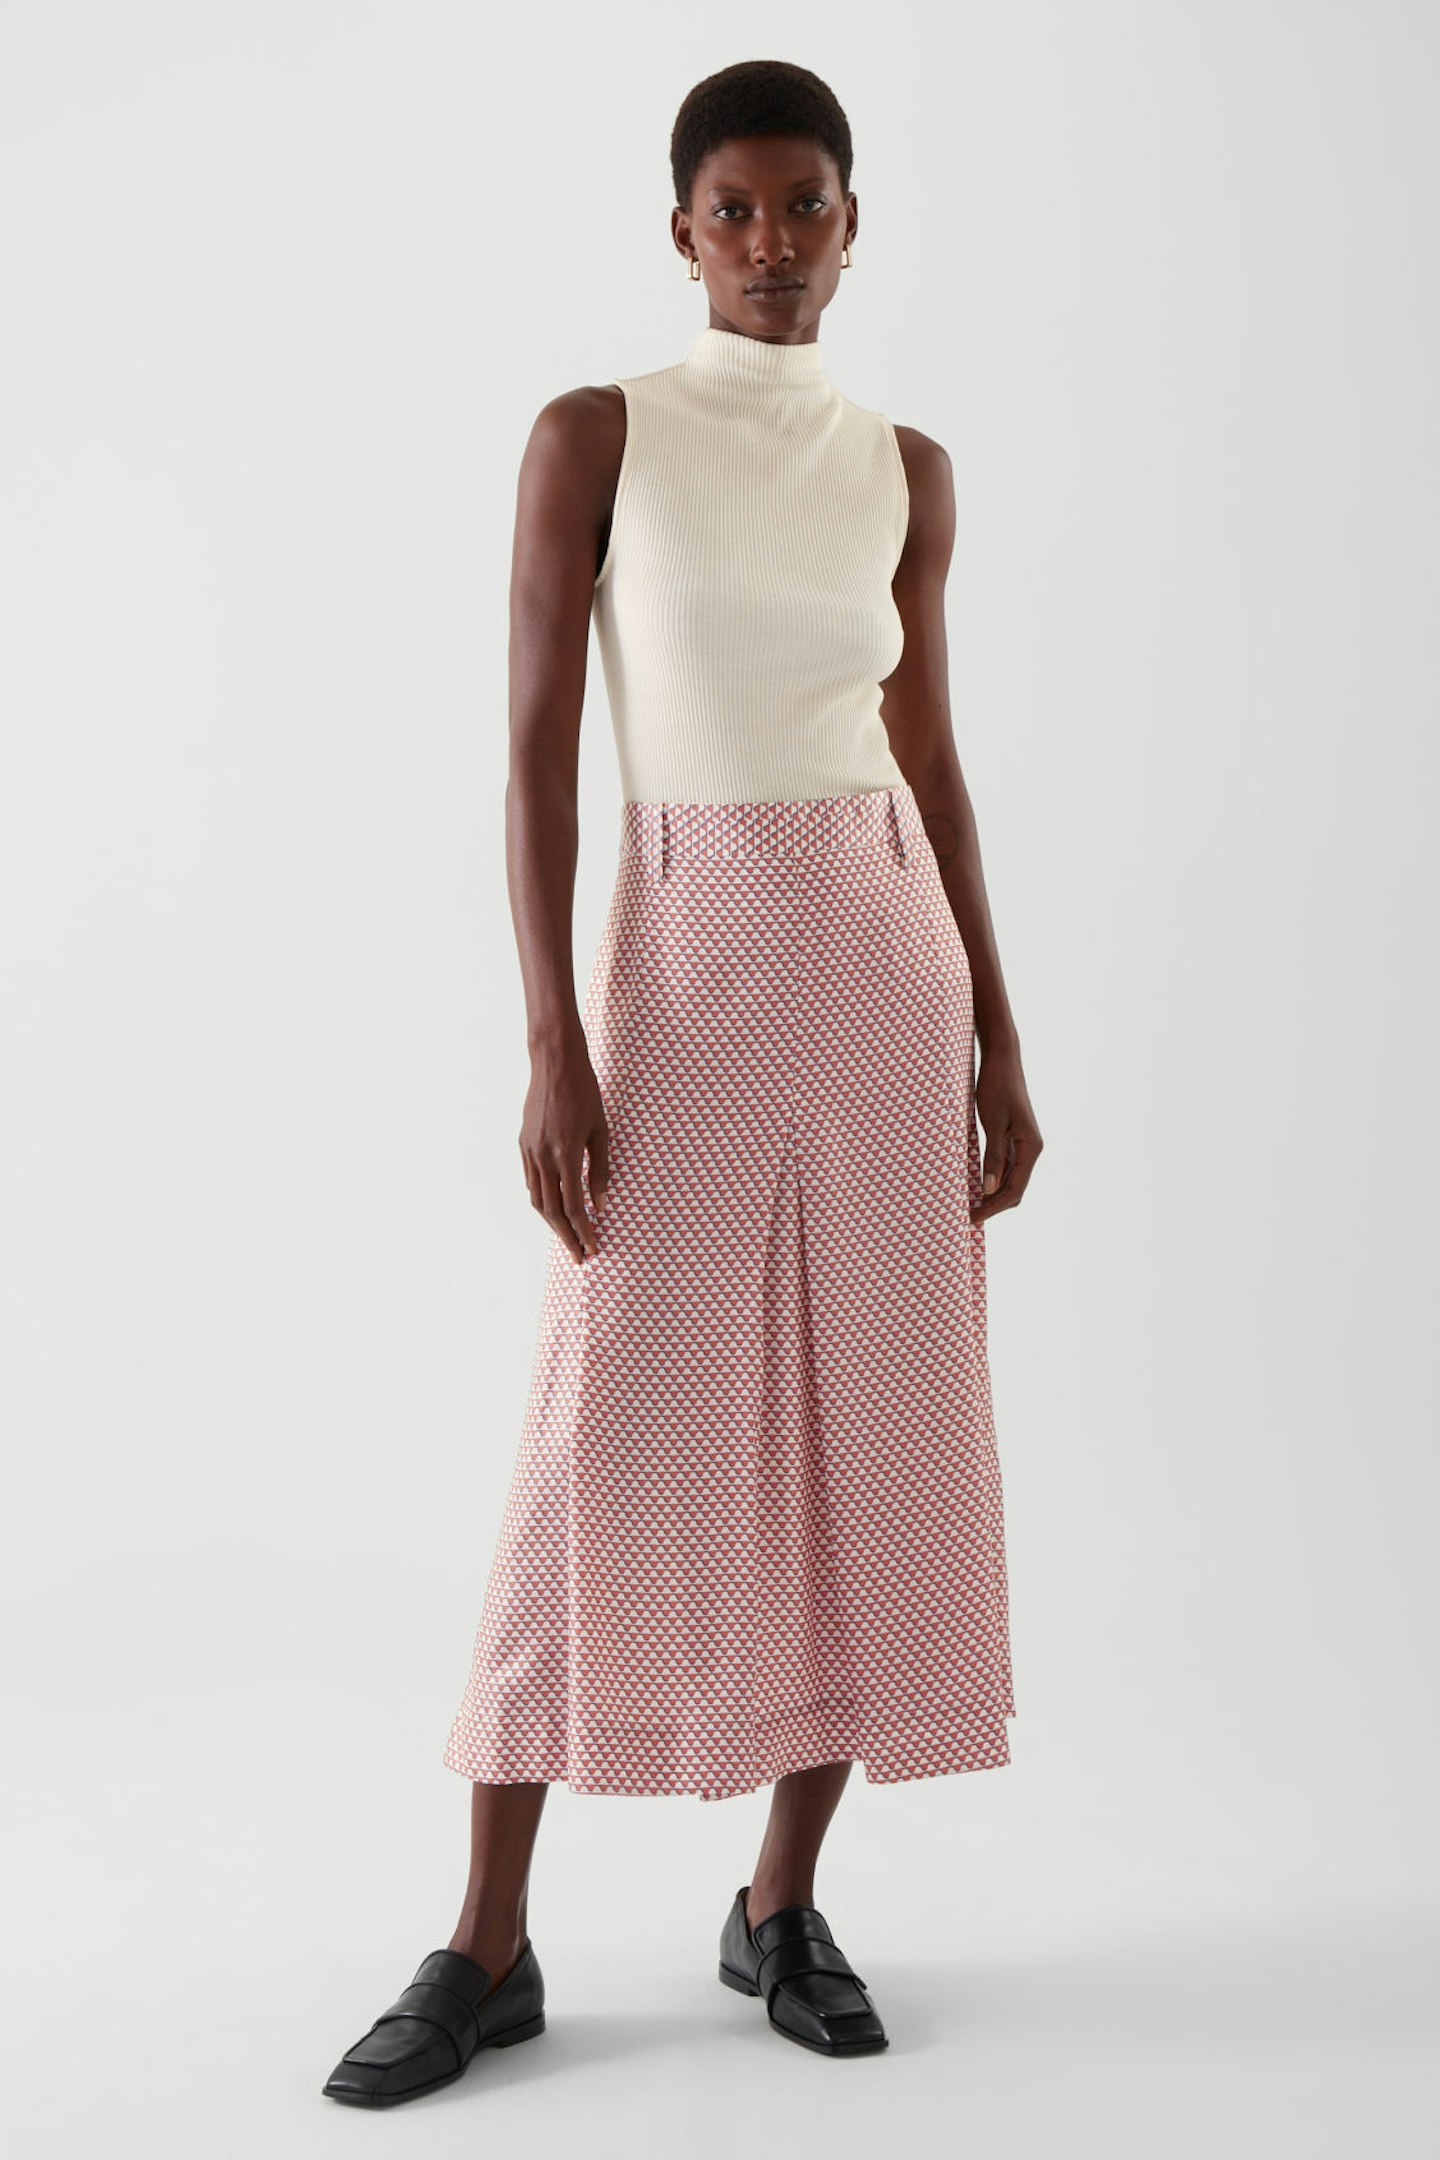 COS, Midi Skirt, £59